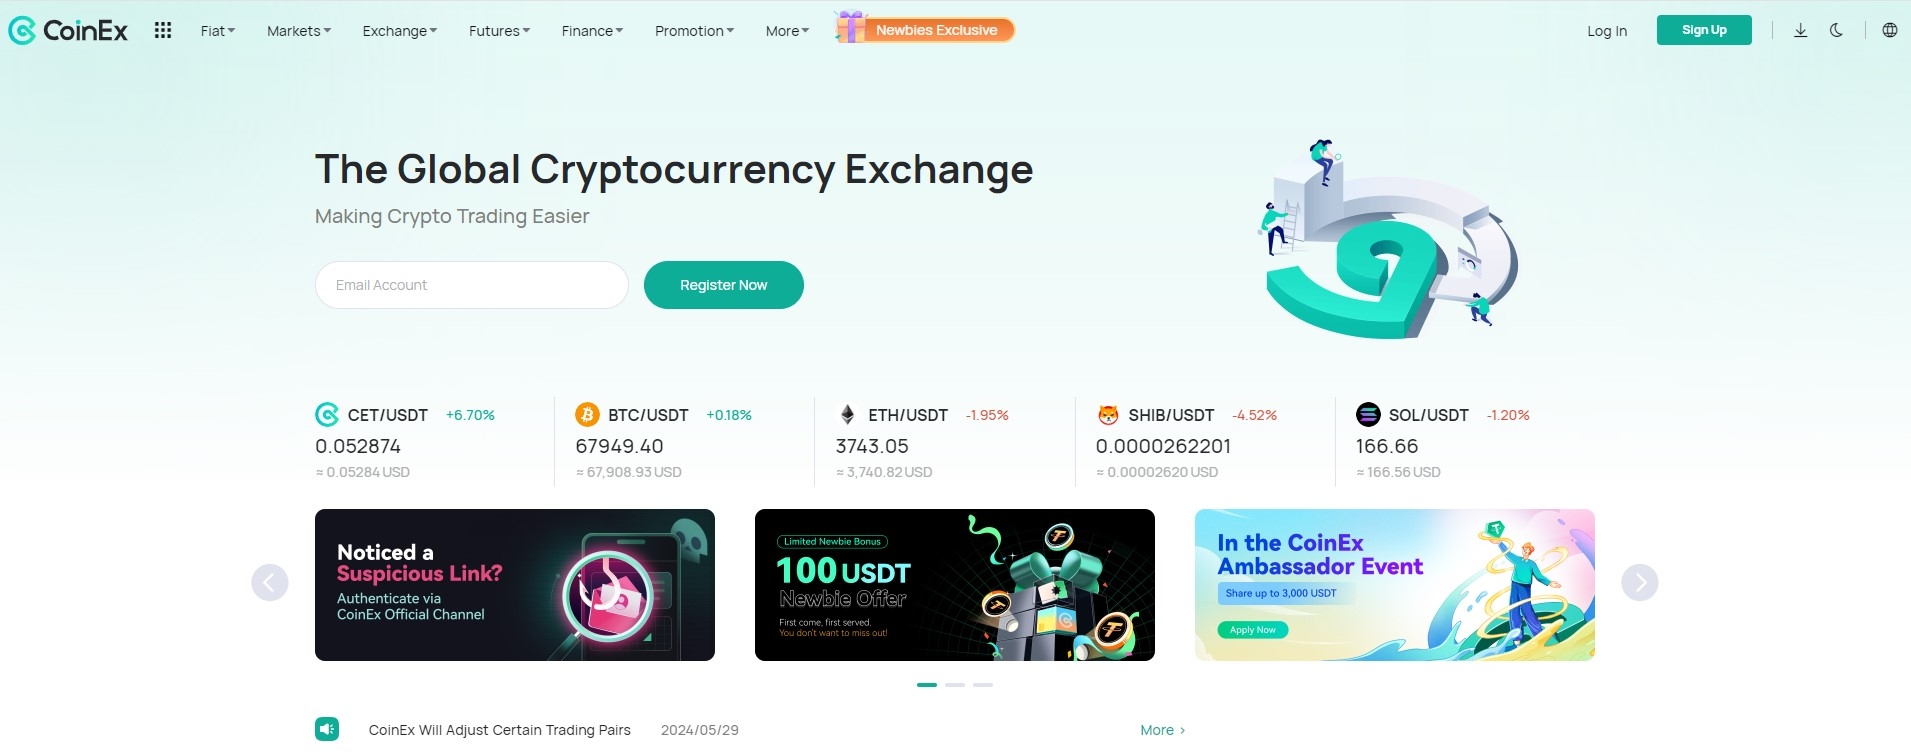 Home page of coinex.com